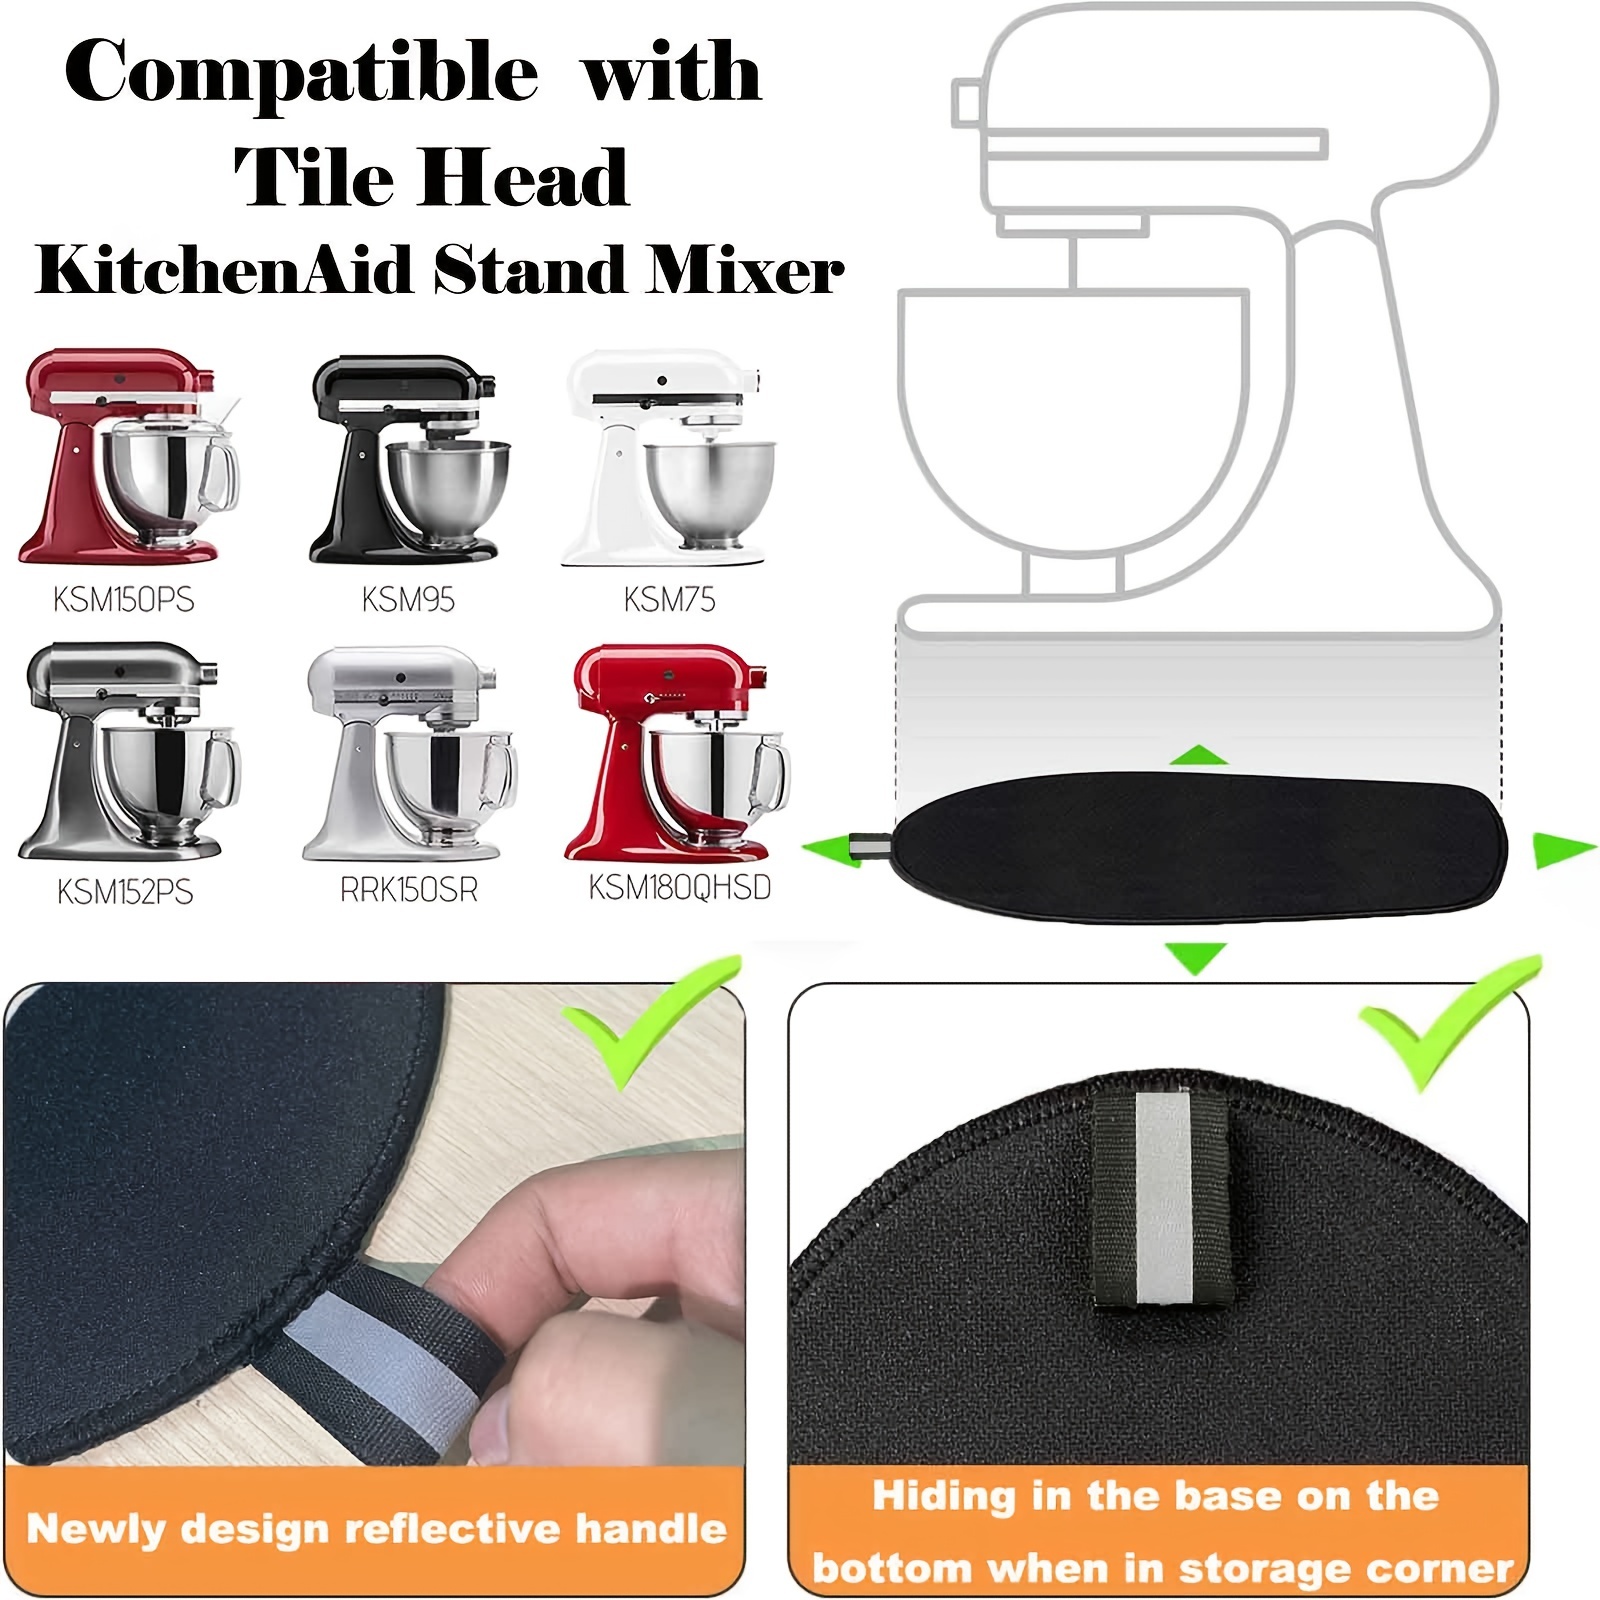 Mixer Slider Mat for KitchenAid Professional Bowl-Lift Mixer, Mixer Mover Sliding  Mat Pad Appliance Slider Compatible with KitchenAid Mixer Accessories  KitchenAid Professional Stand Mixer(38cm*22cm) 